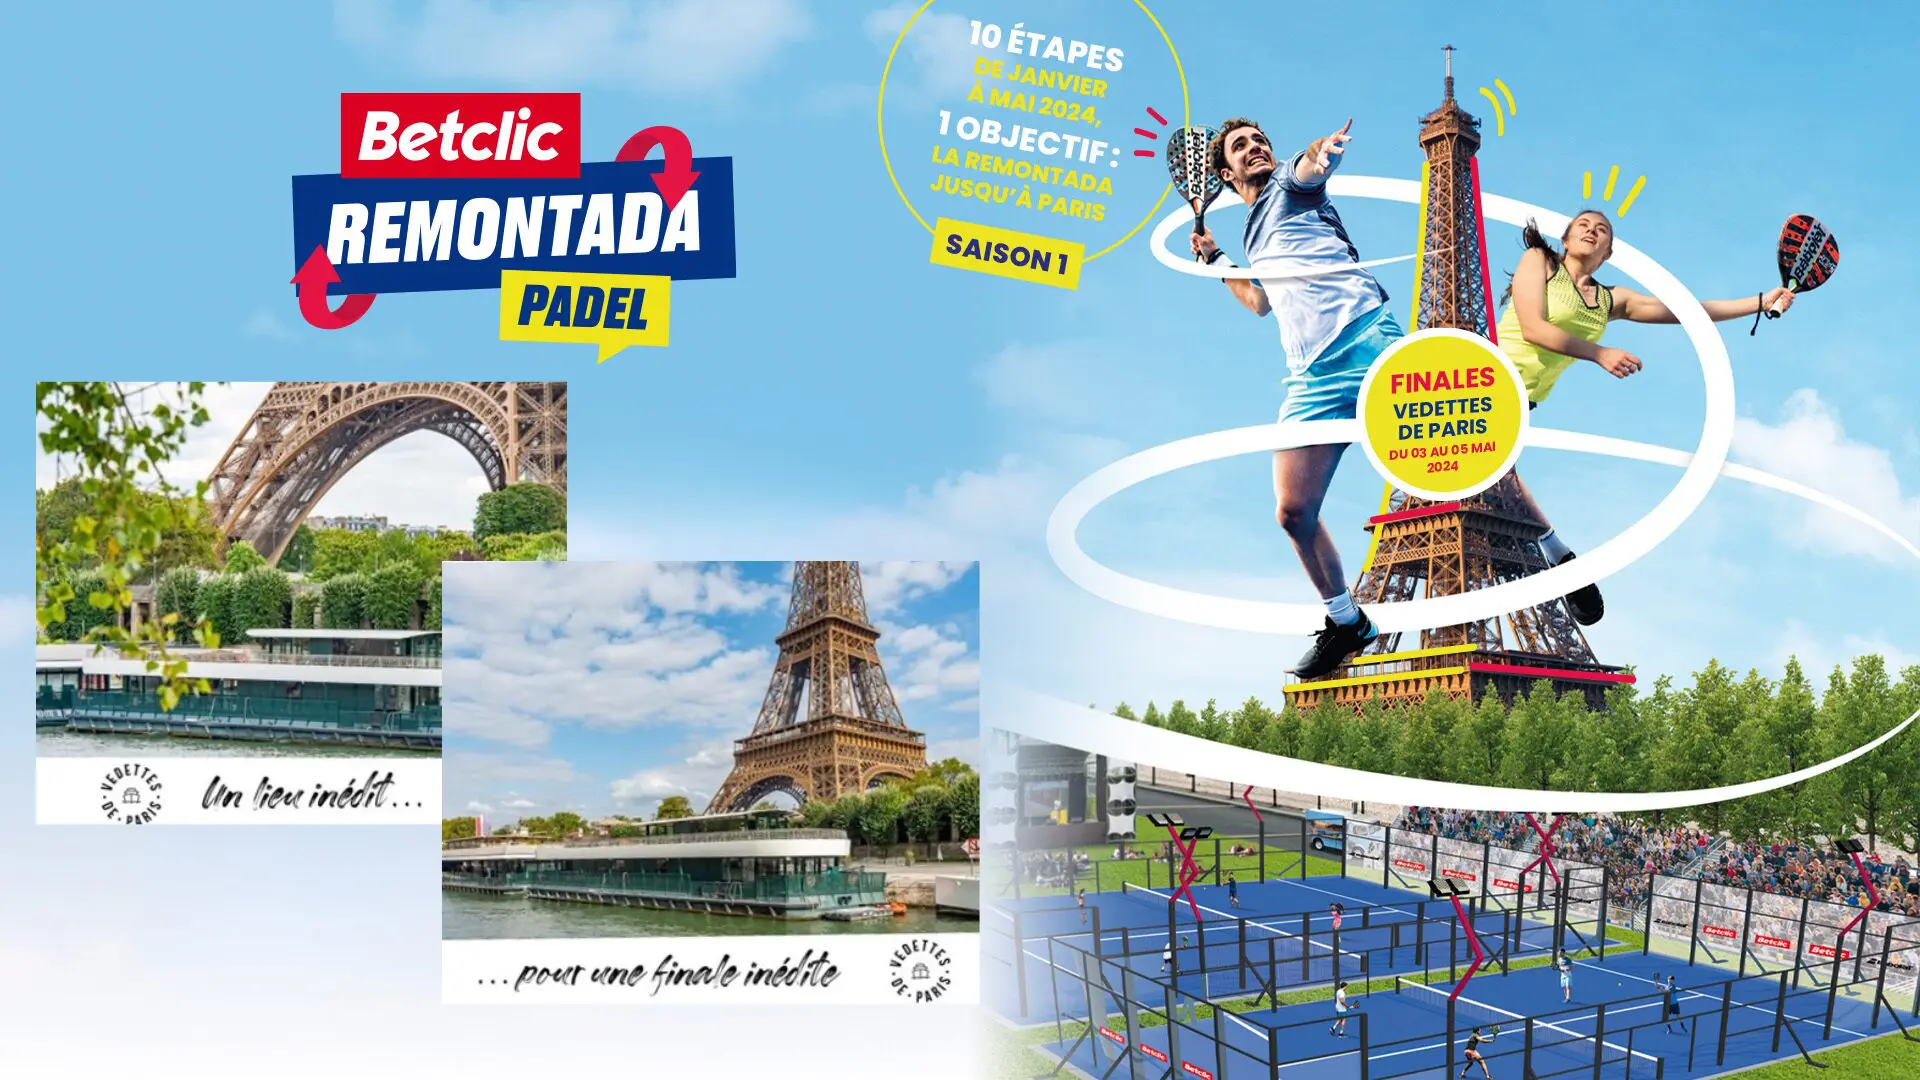 Betclic Remontada – Schöne Menschen am Eiffelturm!